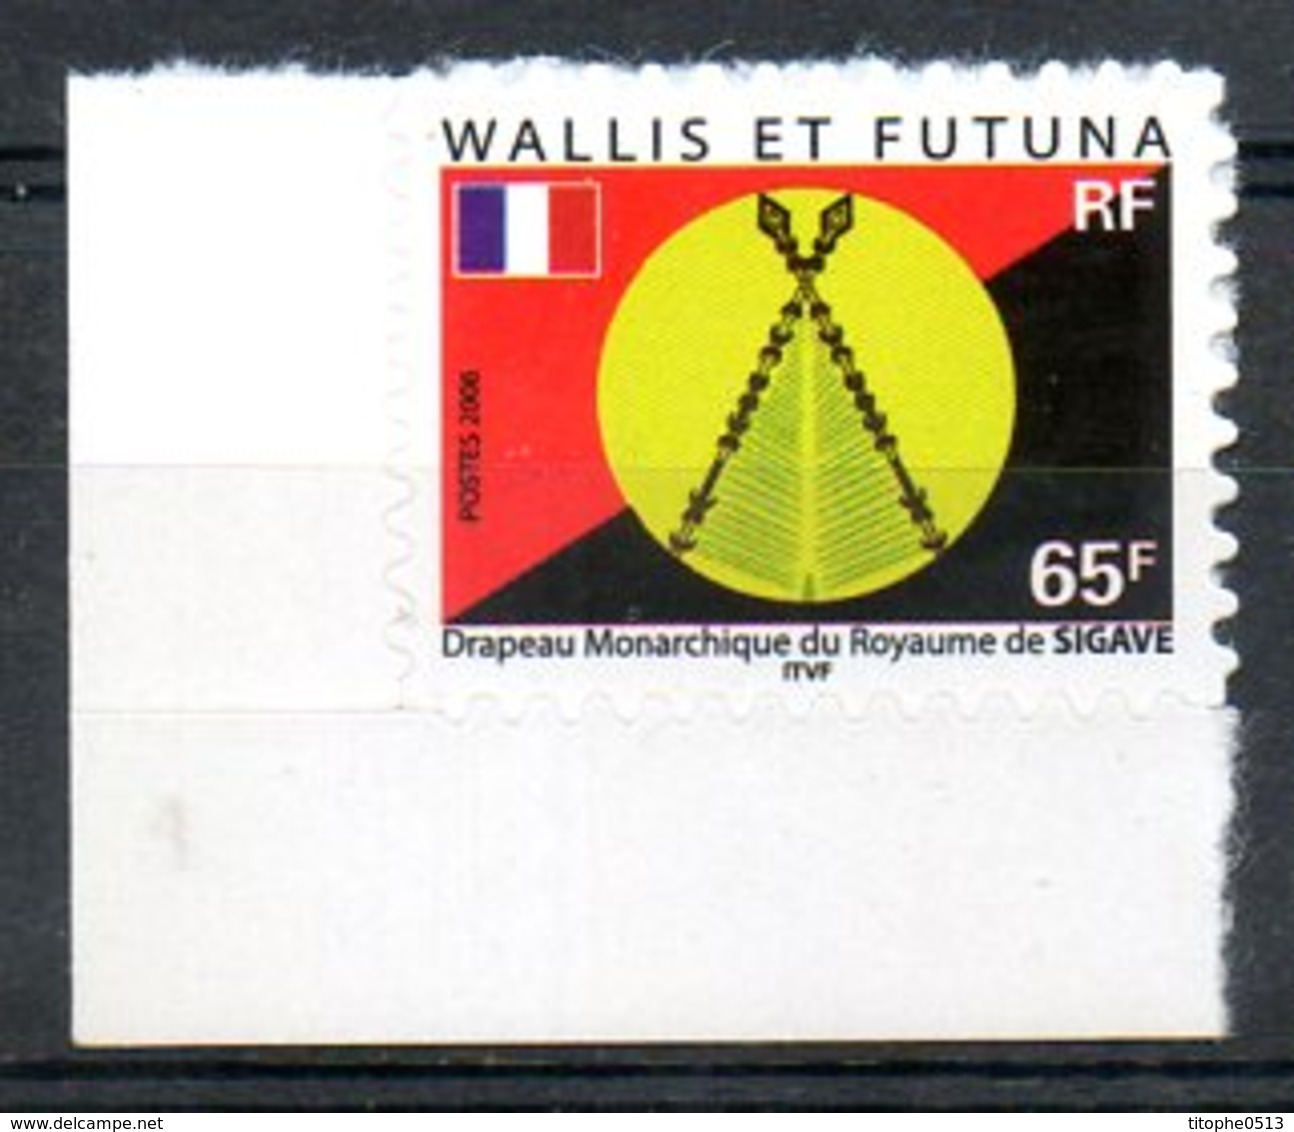 WALLIS & FUTUNA. N°654 De 2006. Drapeau Monarchique Du Royaume De Sigave. - Nuovi